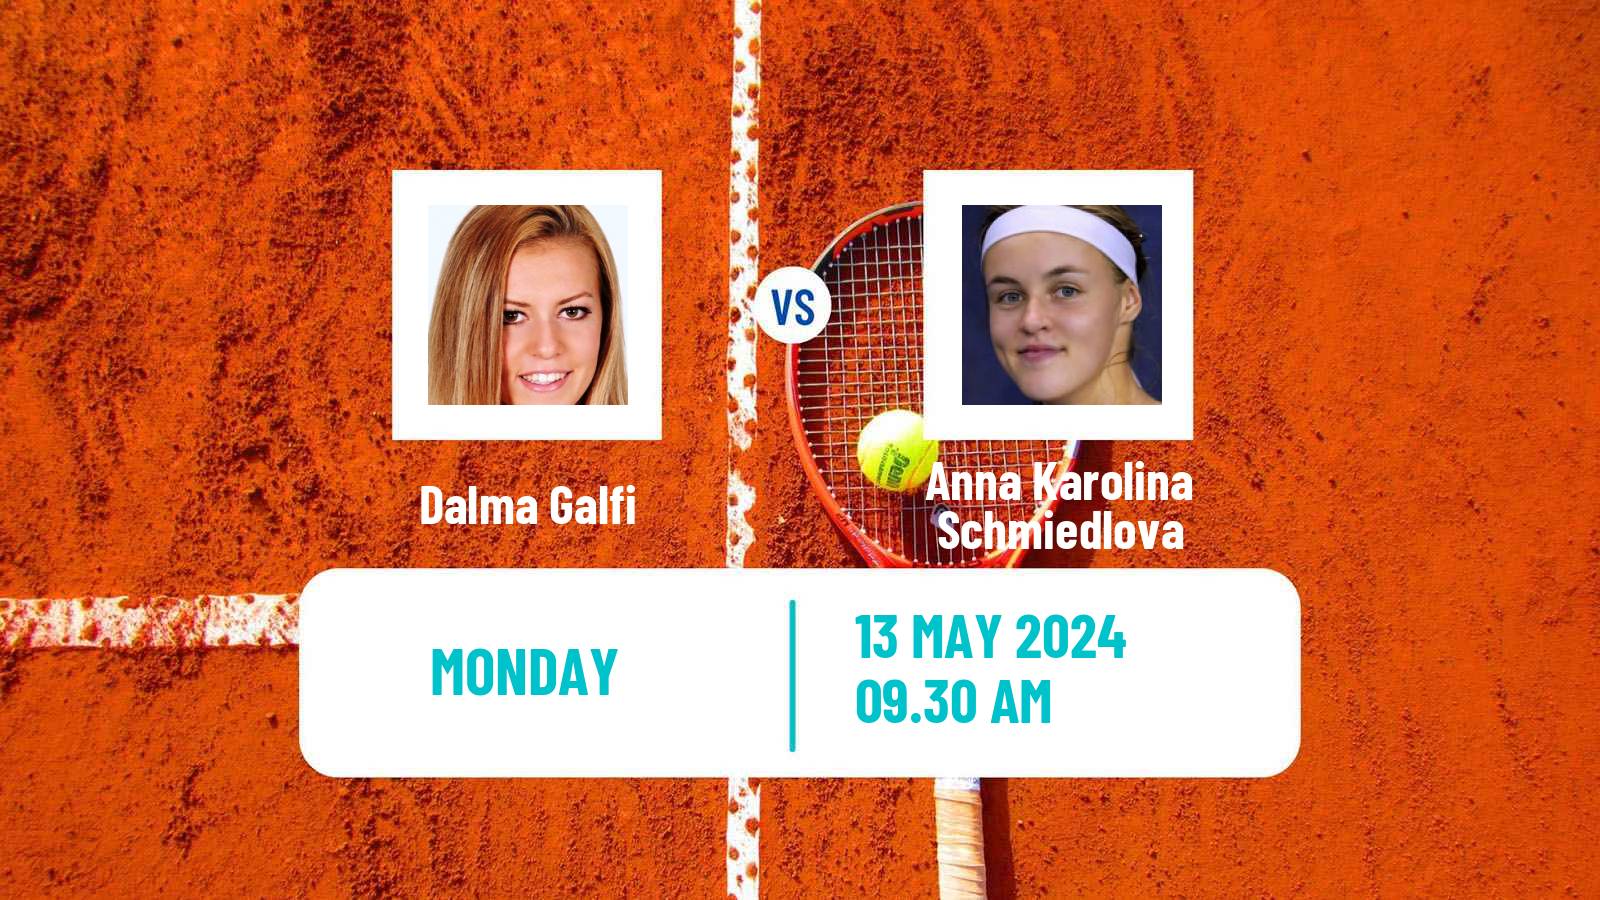 Tennis Parma Challenger Women 2024 Dalma Galfi - Anna Karolina Schmiedlova